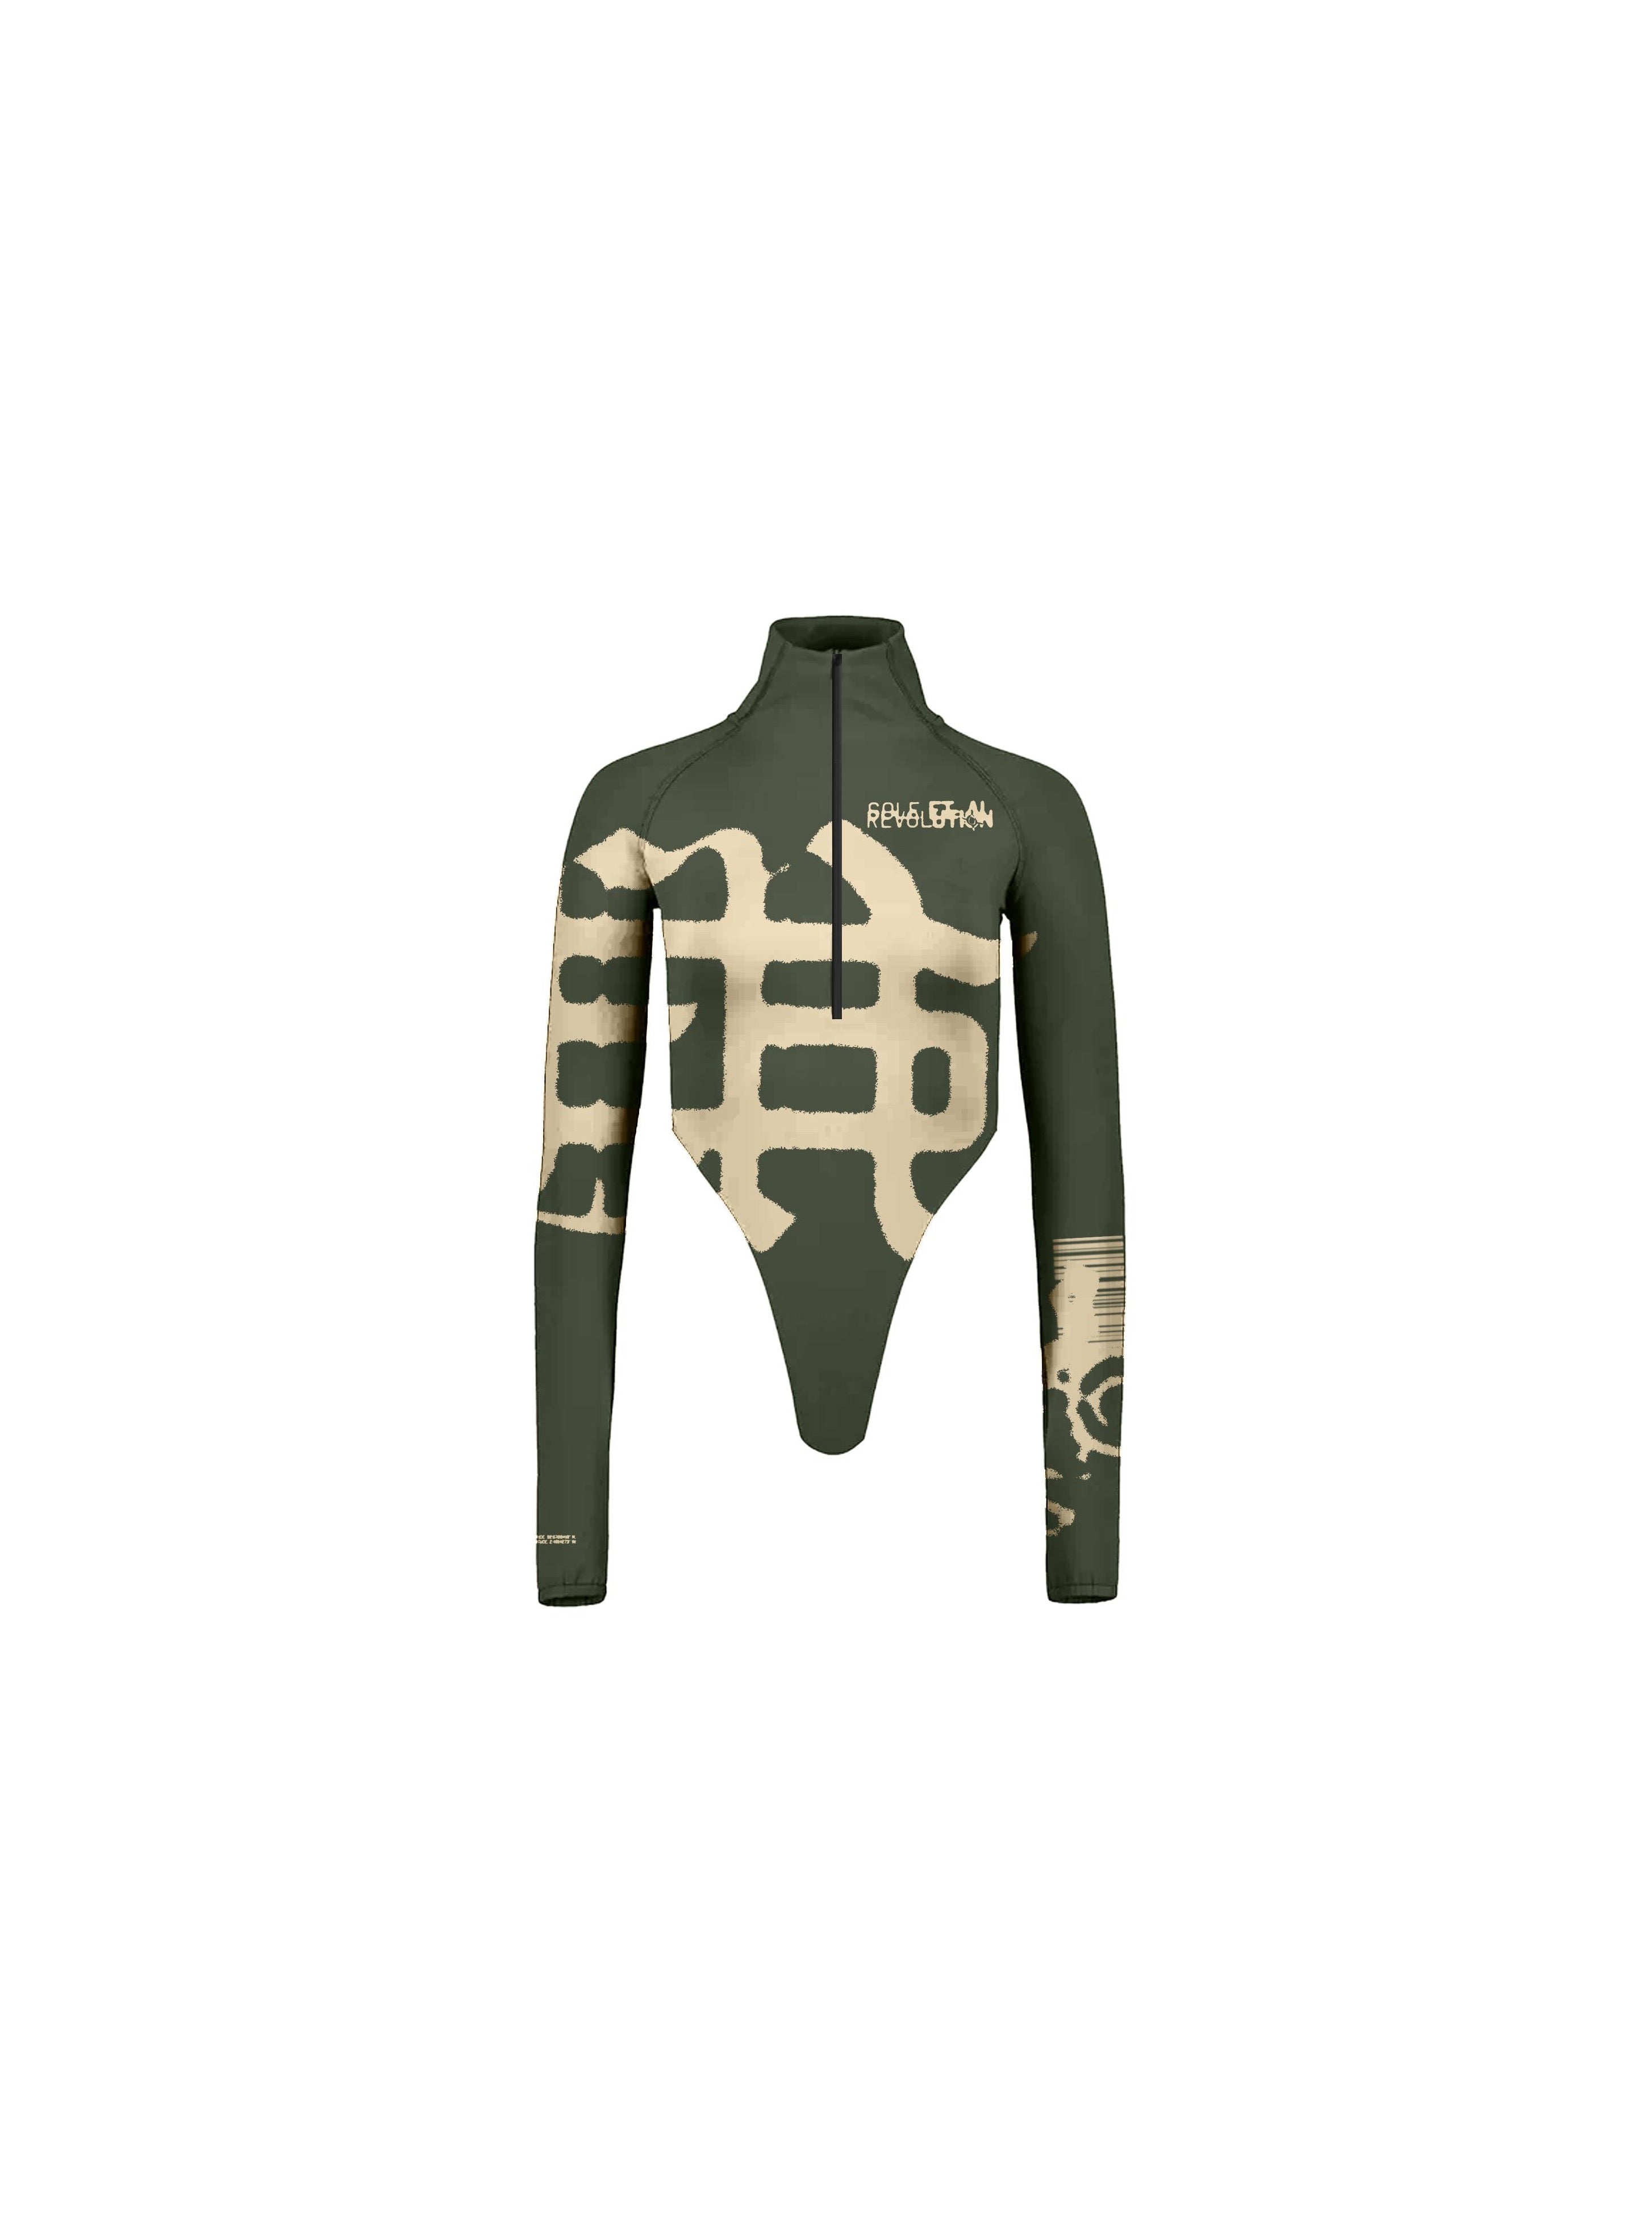 Sole et. Al Revølutiøn Zip Bodysuit : Militærgrøn / Sand